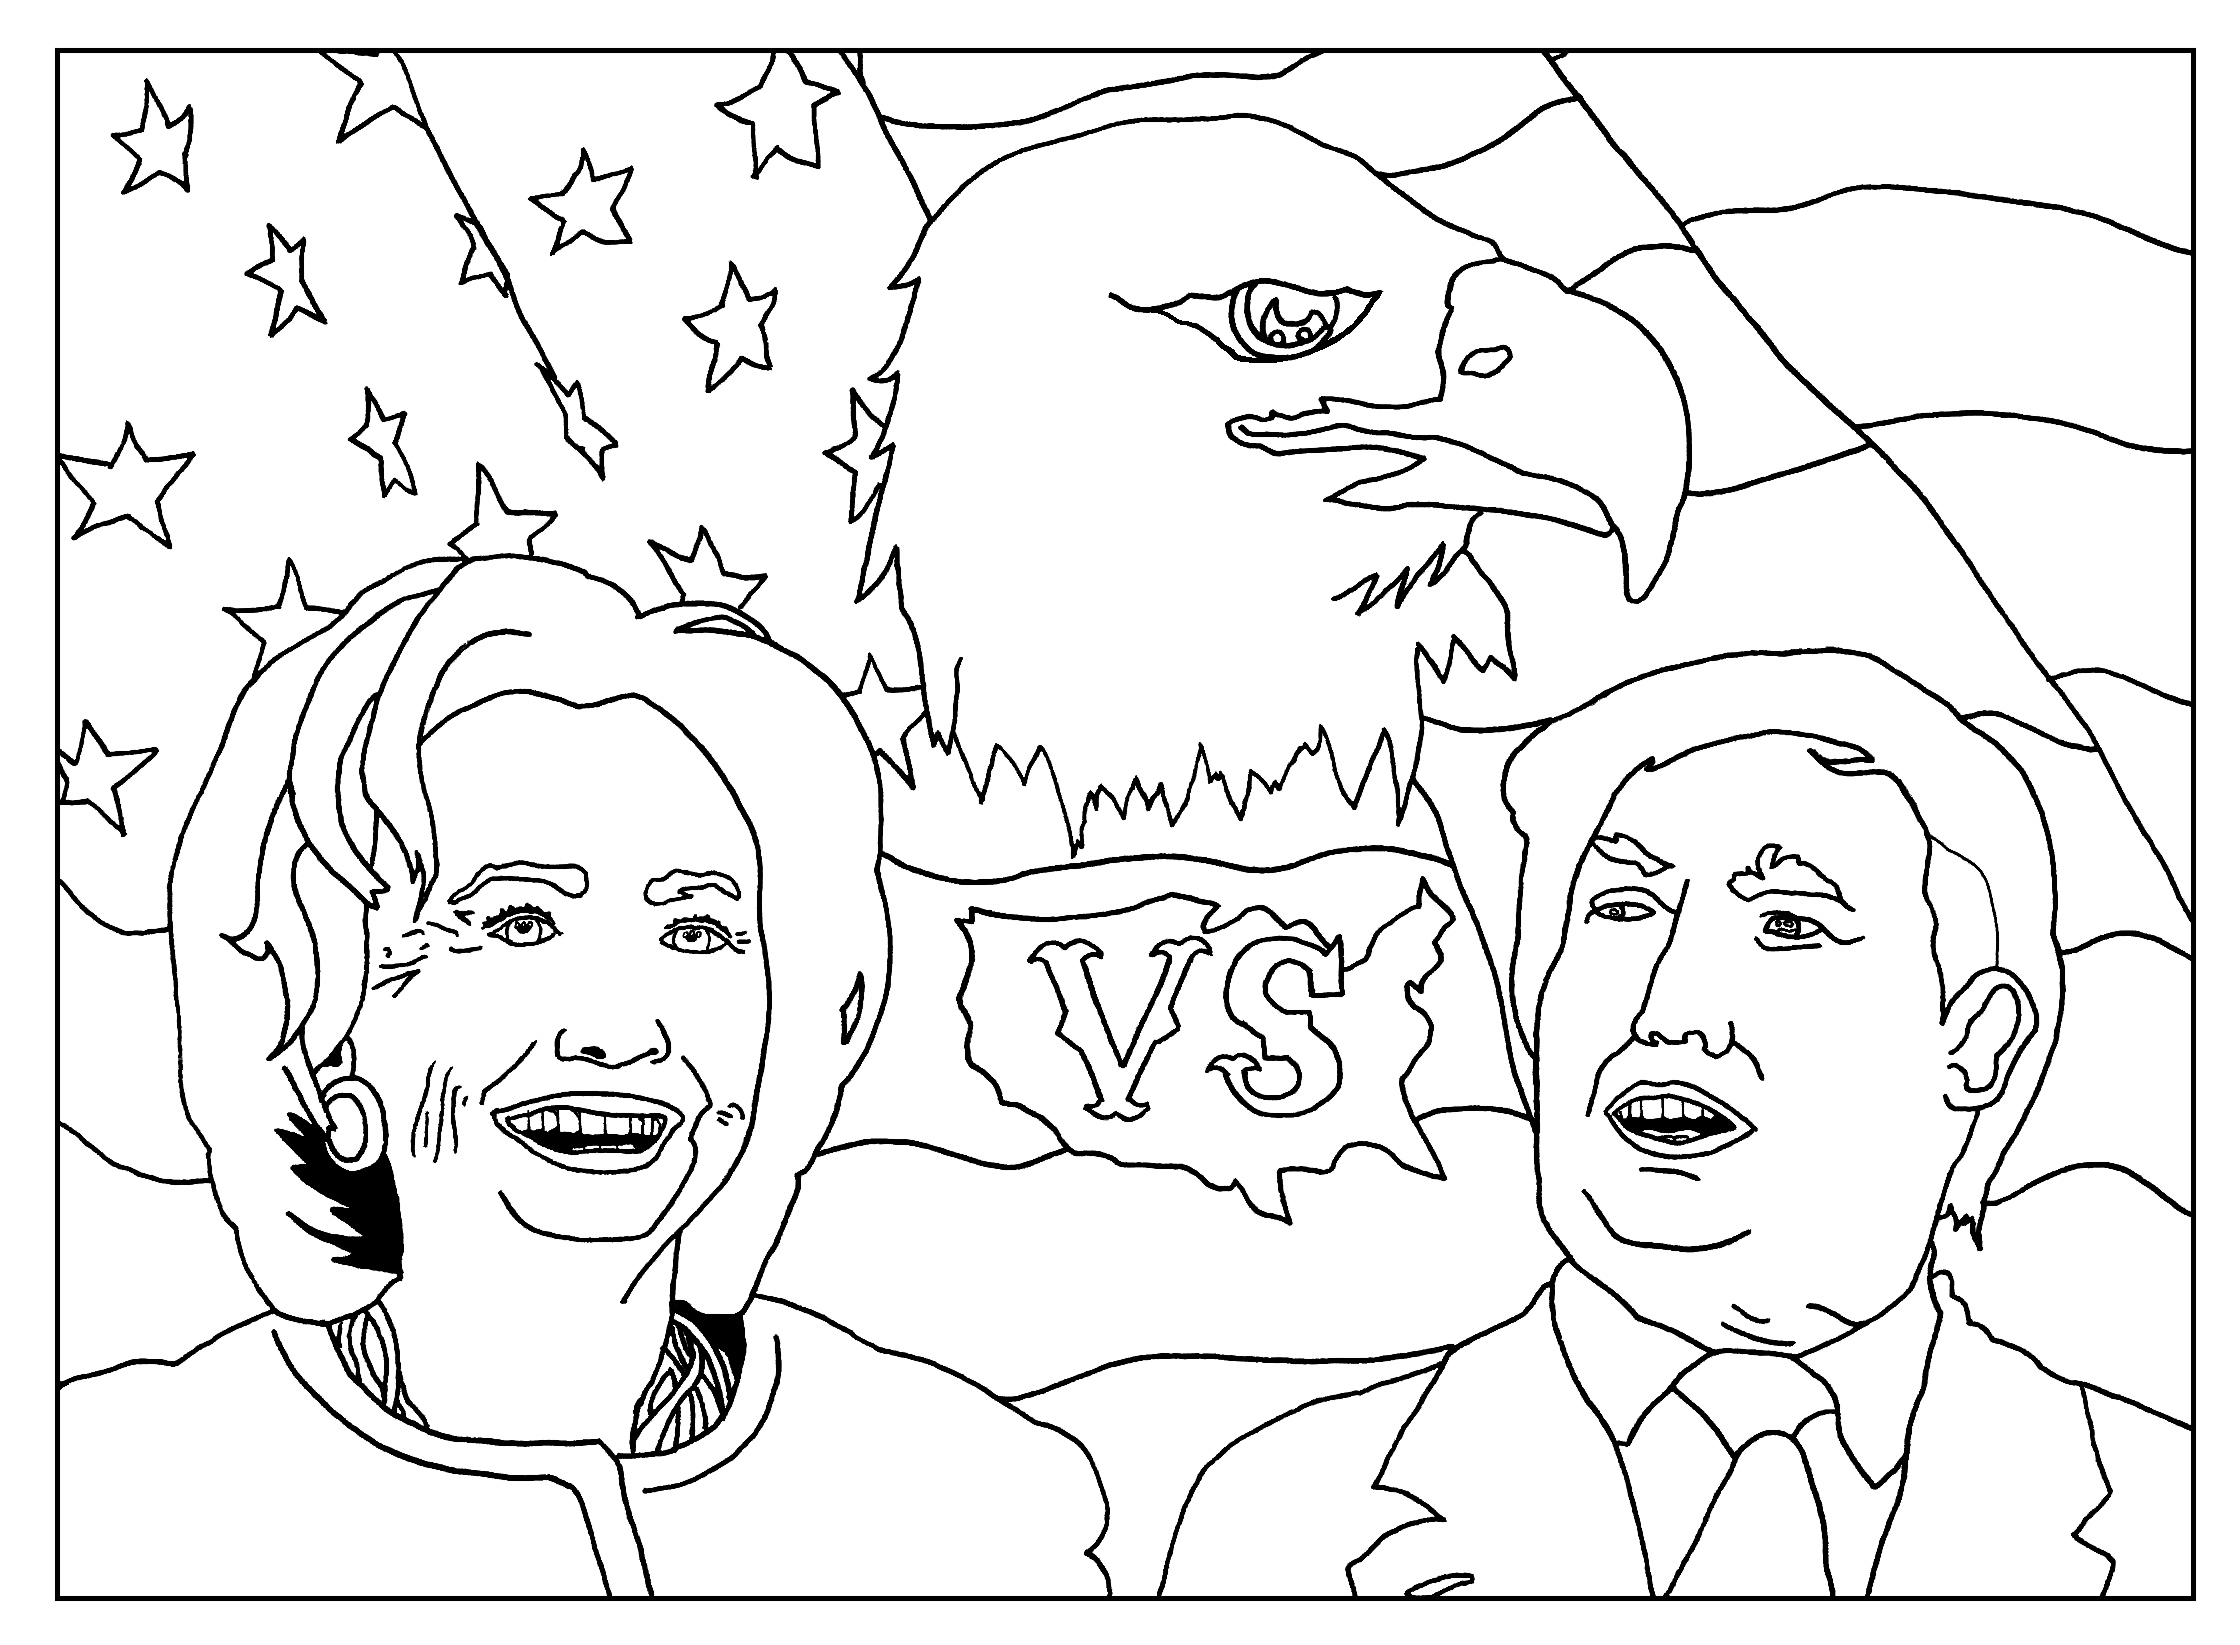 Hillary-vs-Donald-Trump-coloring-page